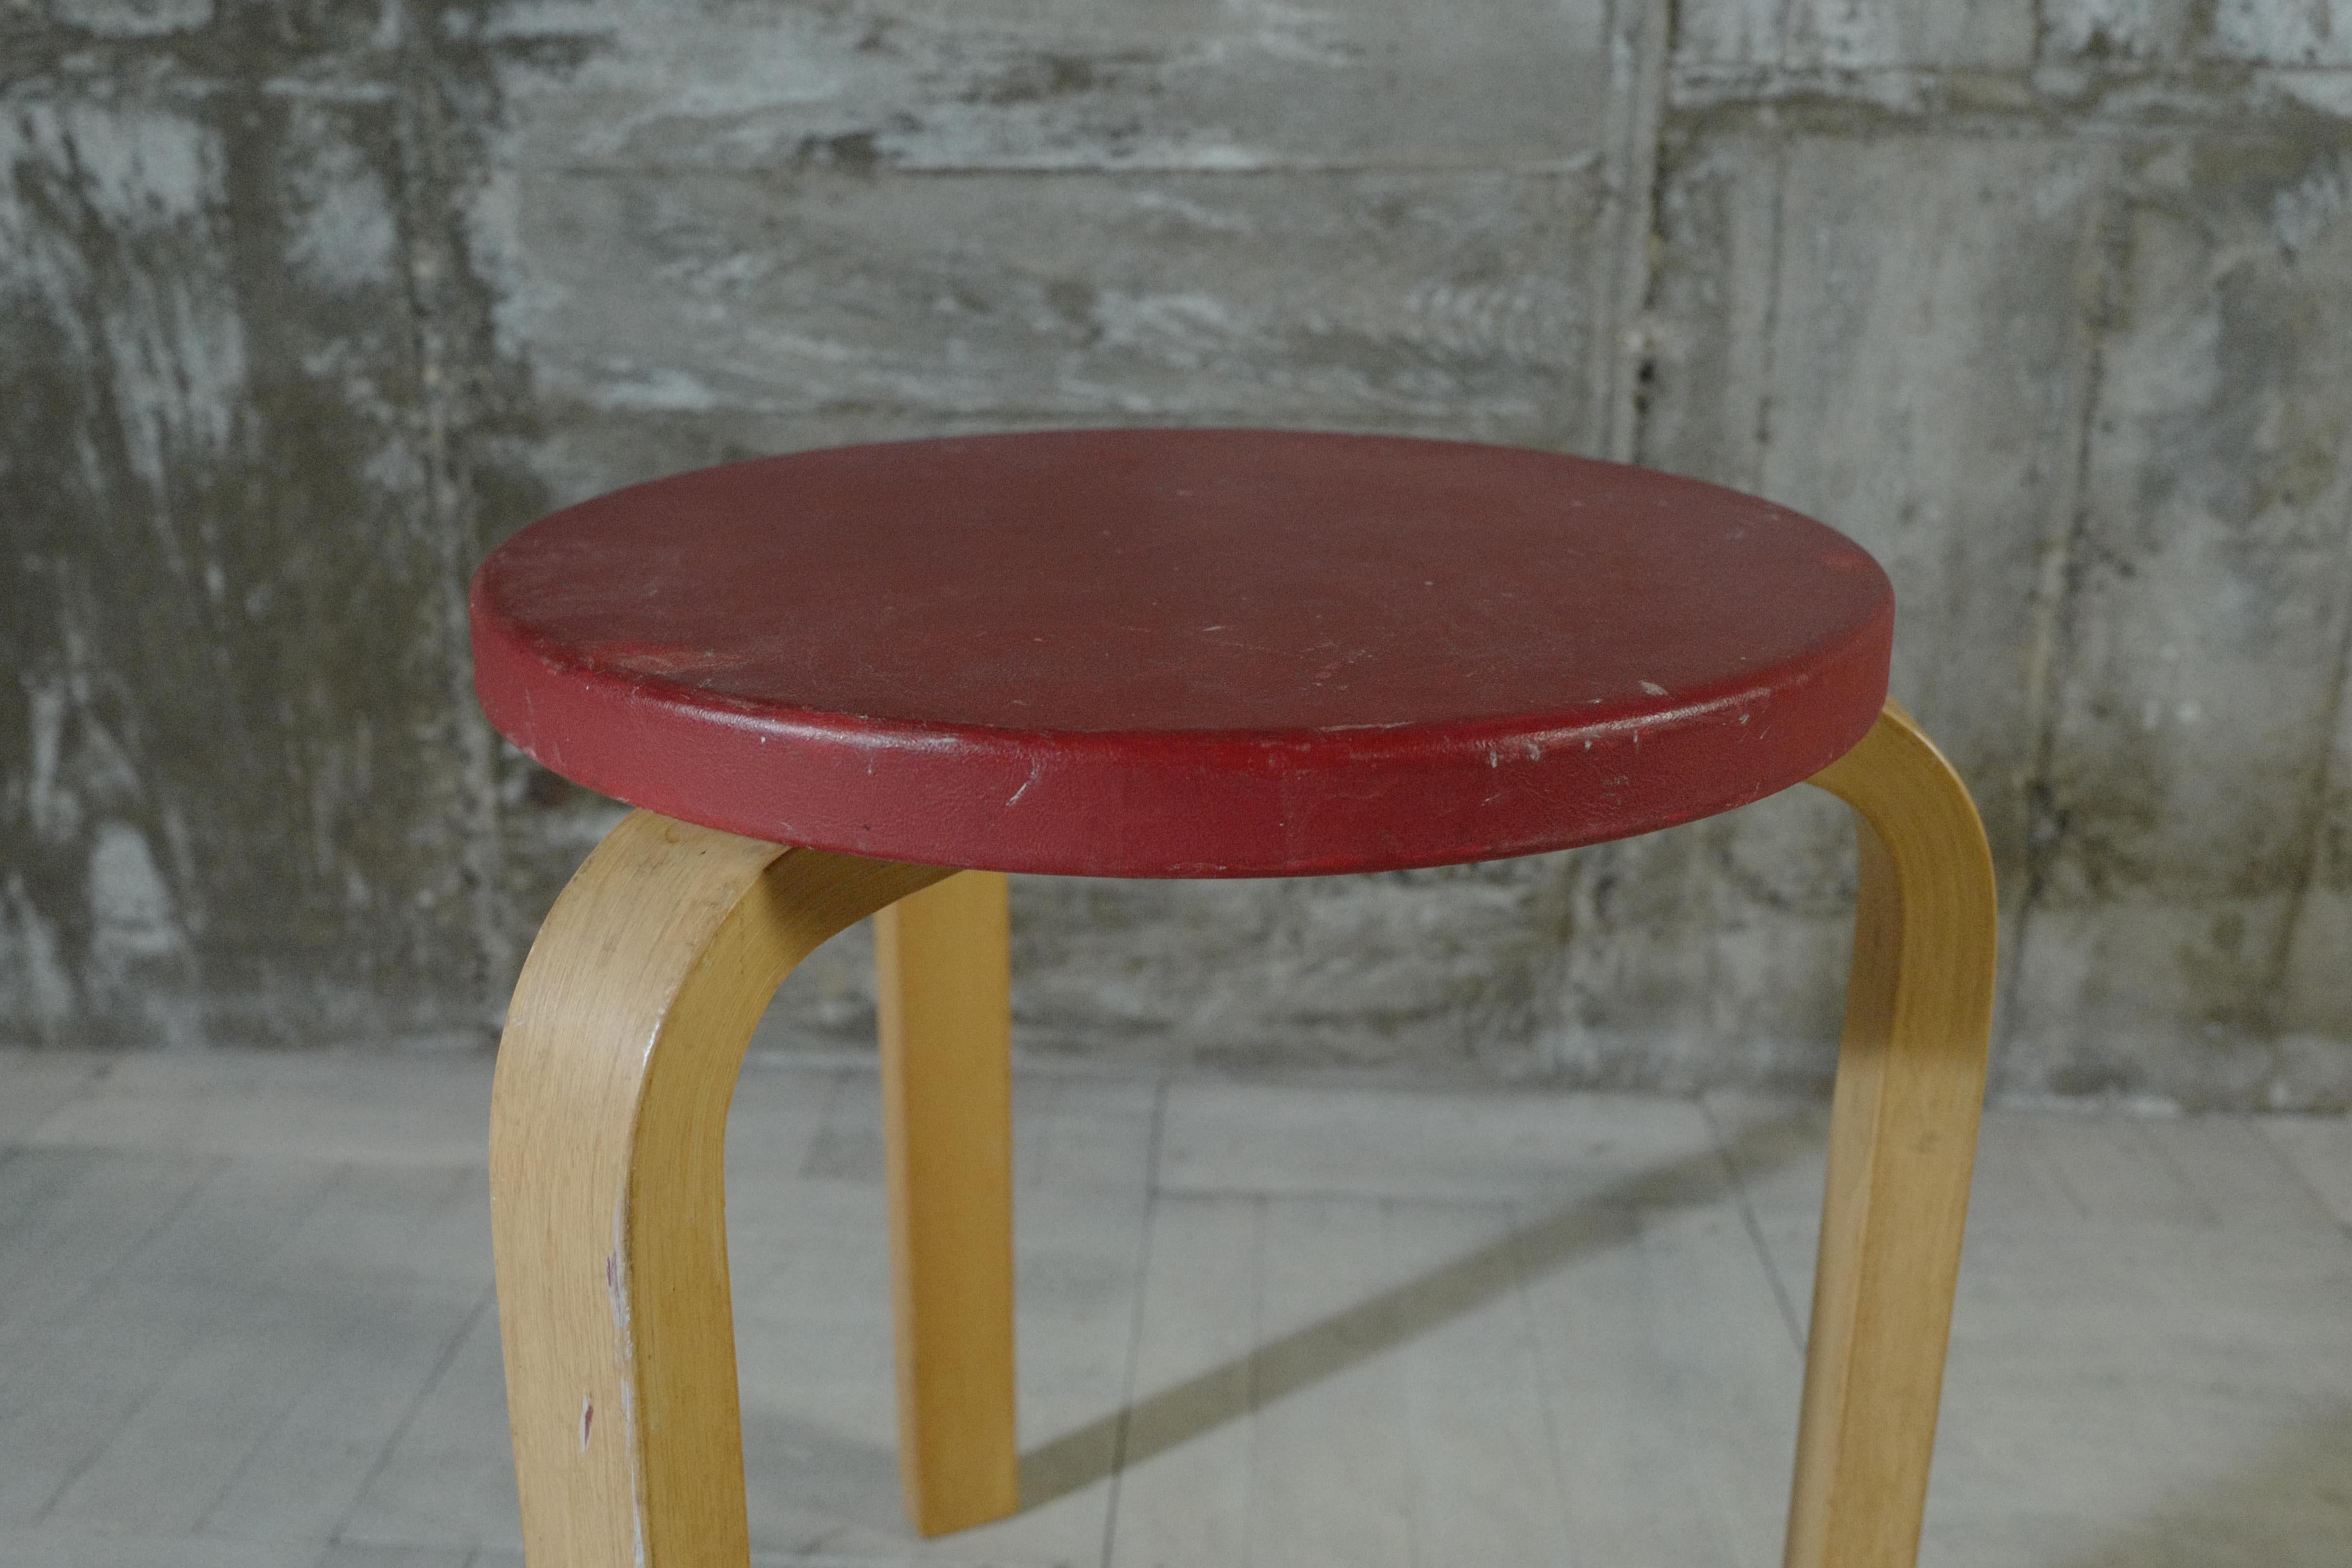 Finnish alvar aalto stool60 vinyl leather red 1950's For Sale